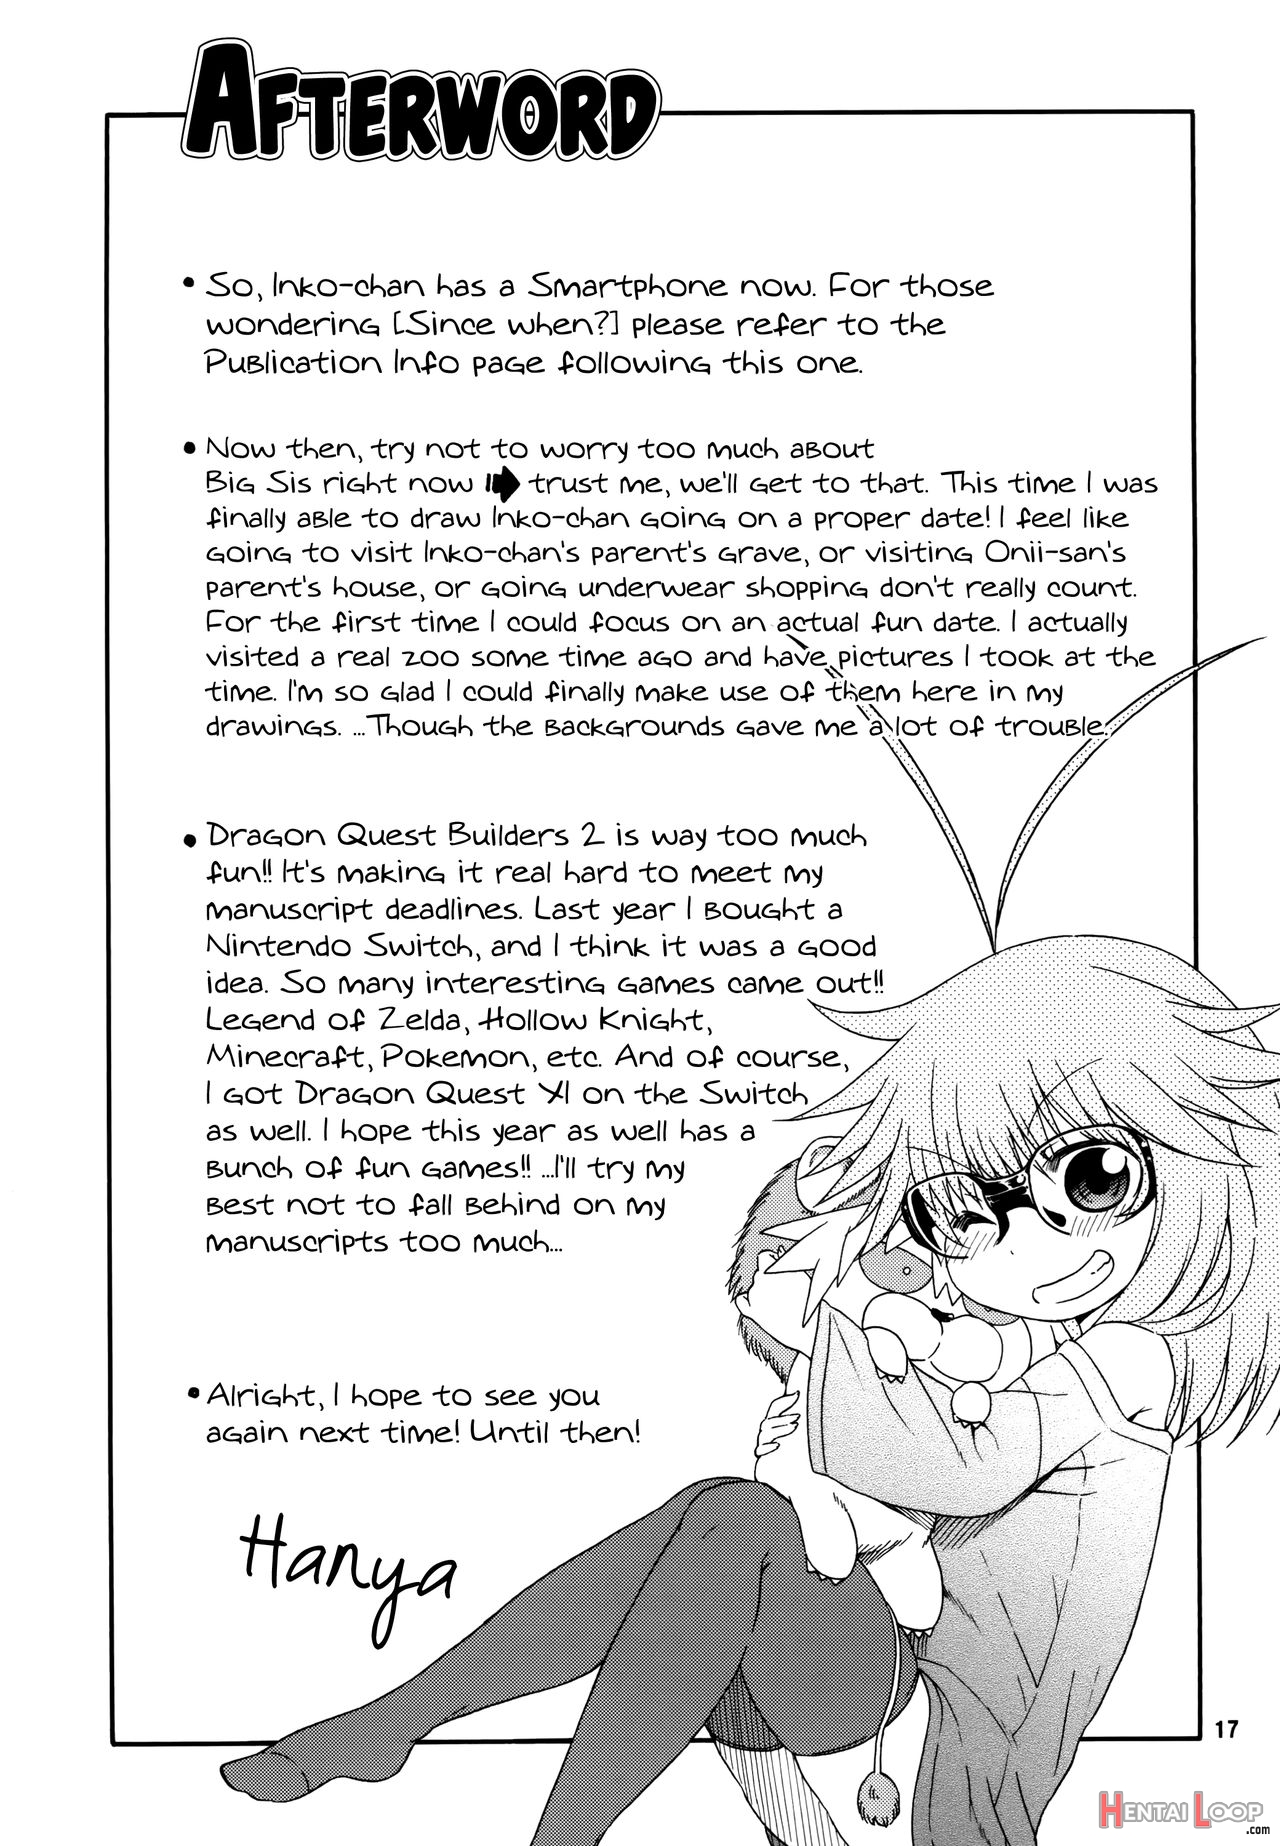 Nightcrawler Inko-chan S5 page 17